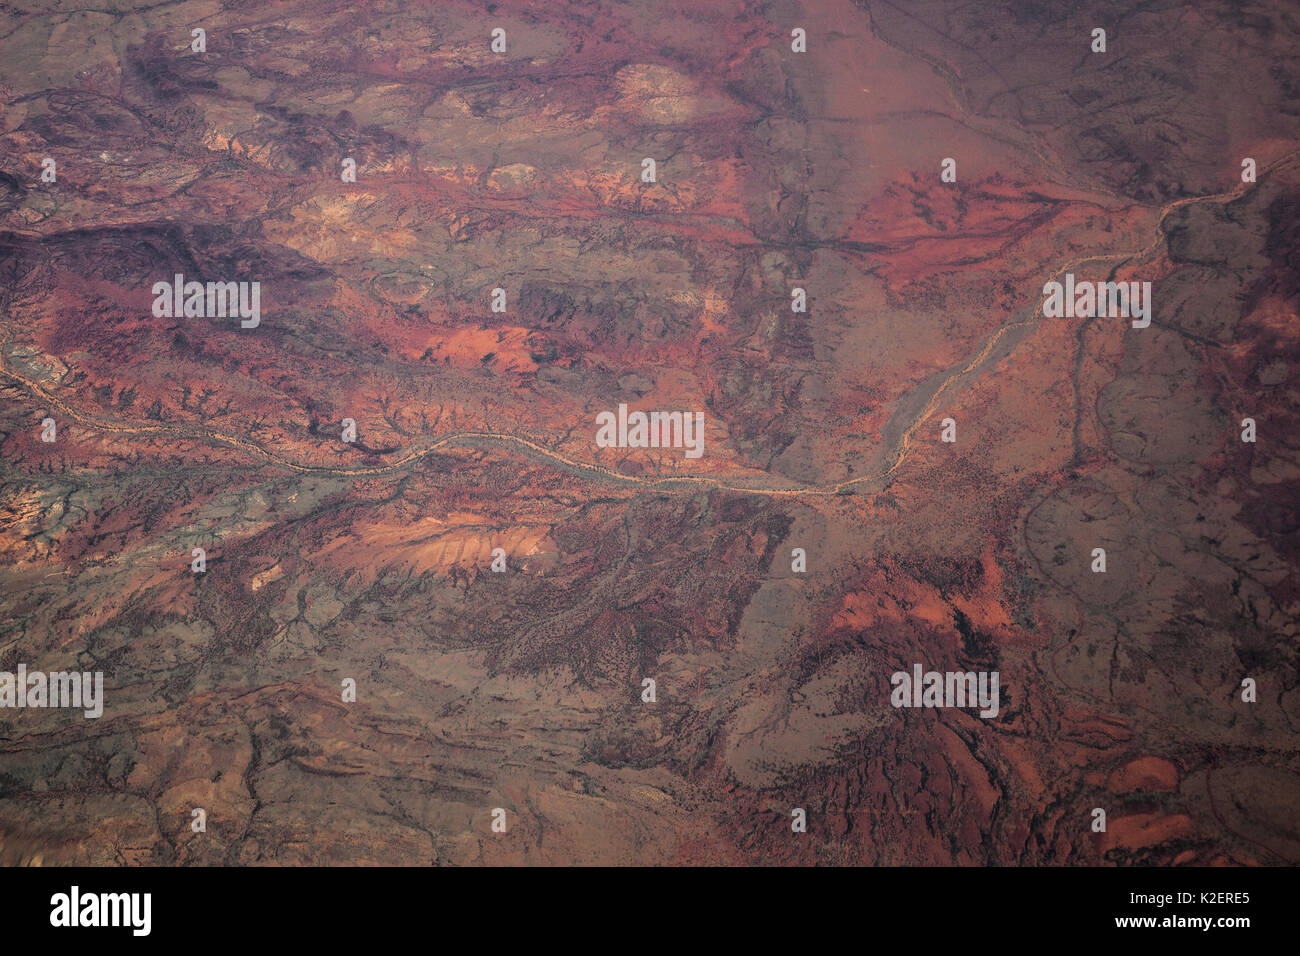 View from plane of desert landscape, Newman, Western Australia, November. Stock Photo